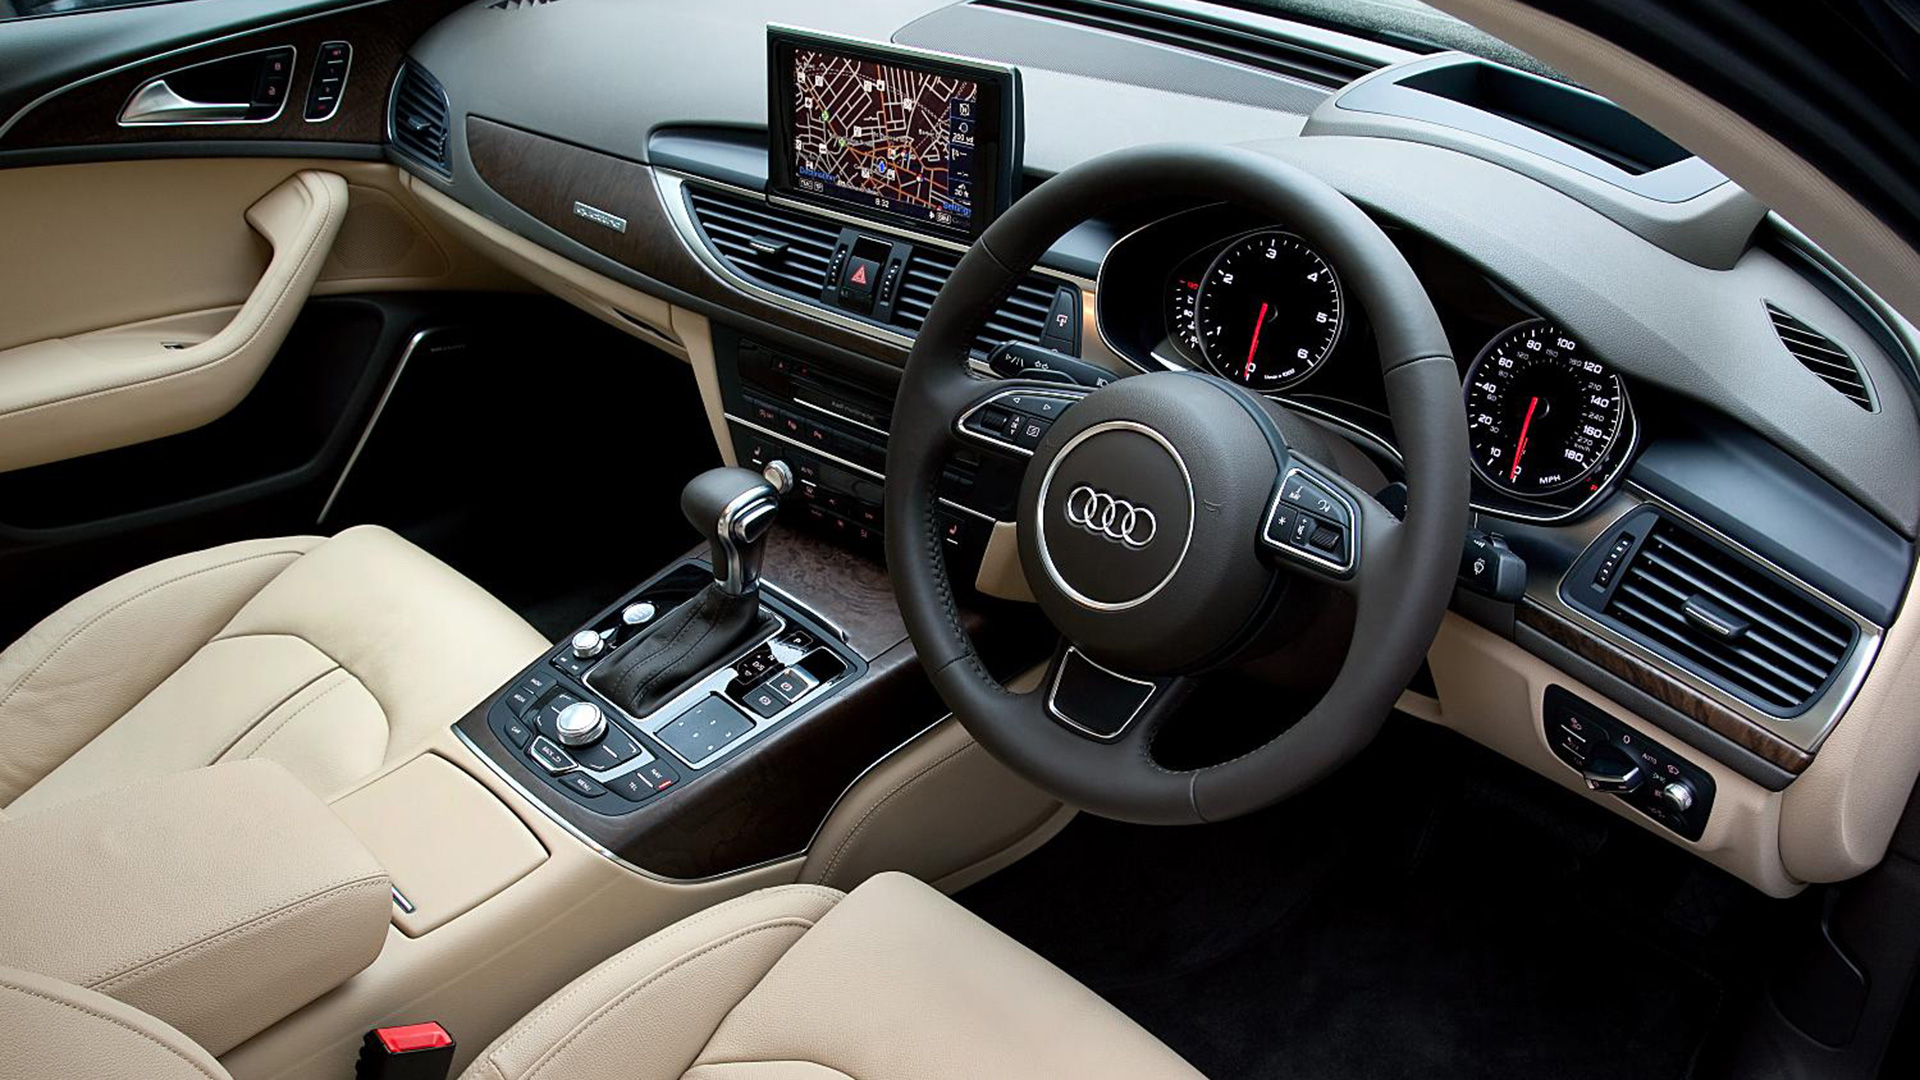 Audi-a6-2013-35 Interior Car Photos - Overdrive